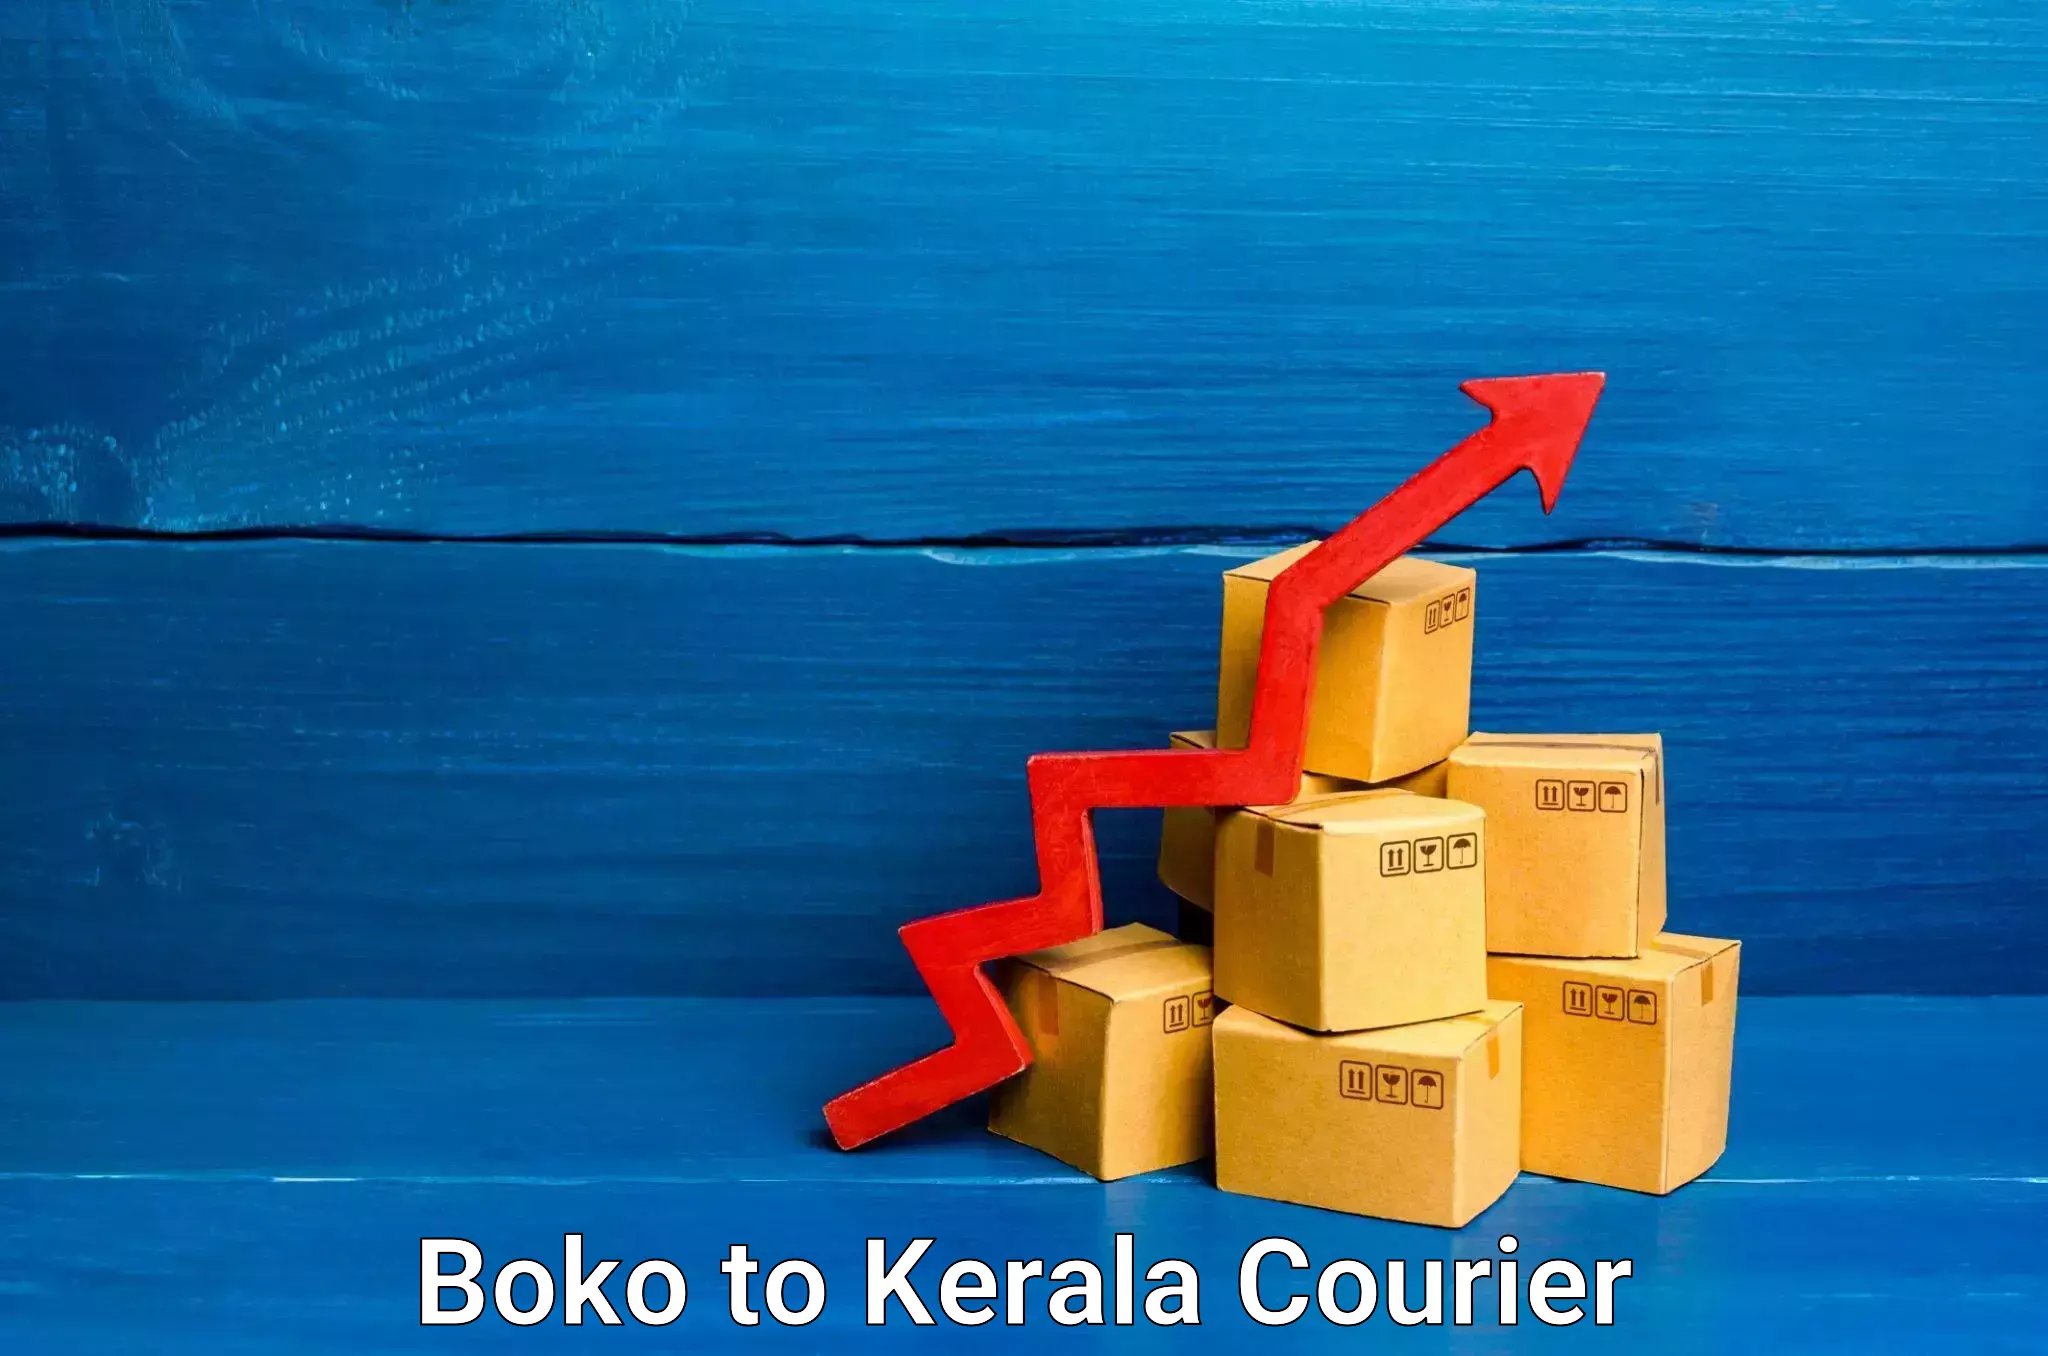 Logistics service provider Boko to Kerala